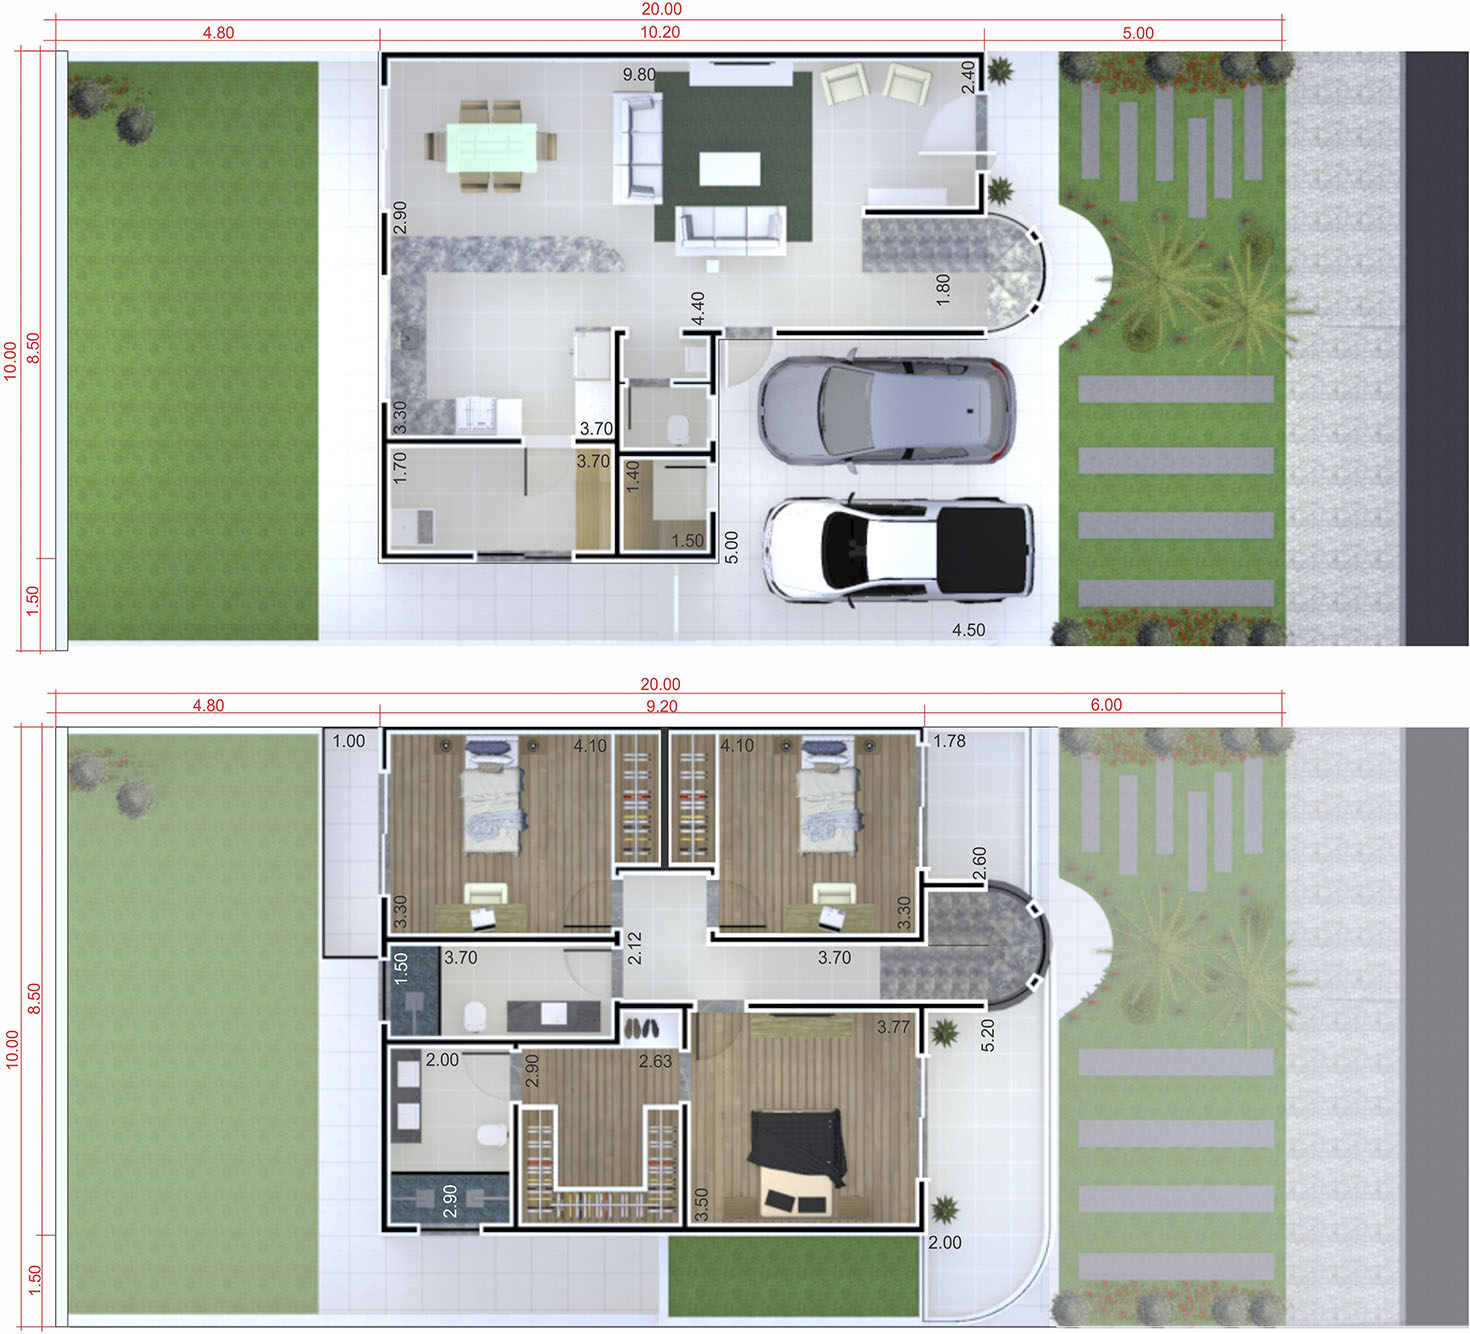 Small modern townhouse plan10x20